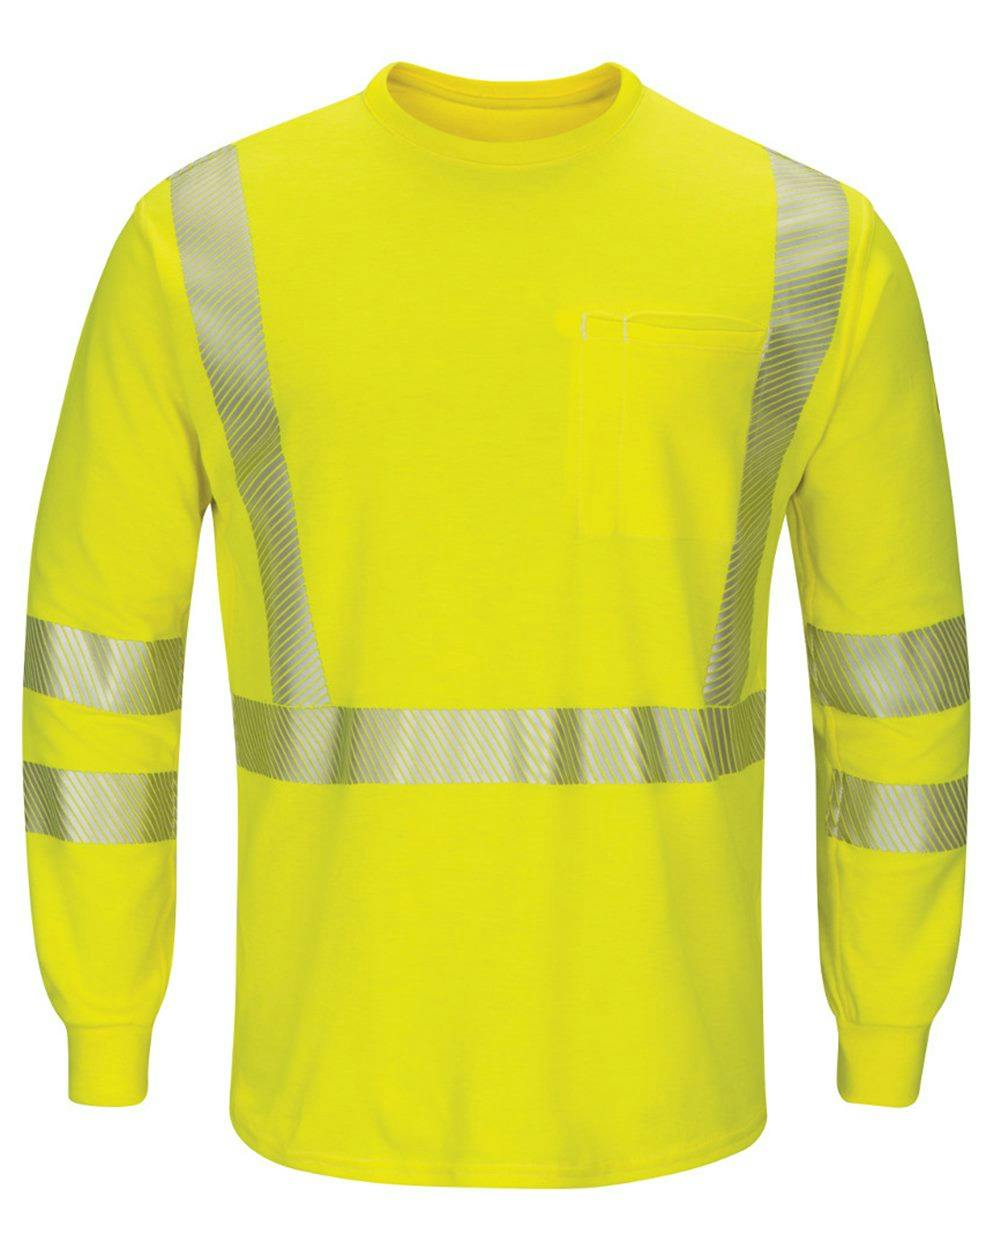 Image for Hi-Visibility Lightweight Long Sleeve T-Shirt - SMK8